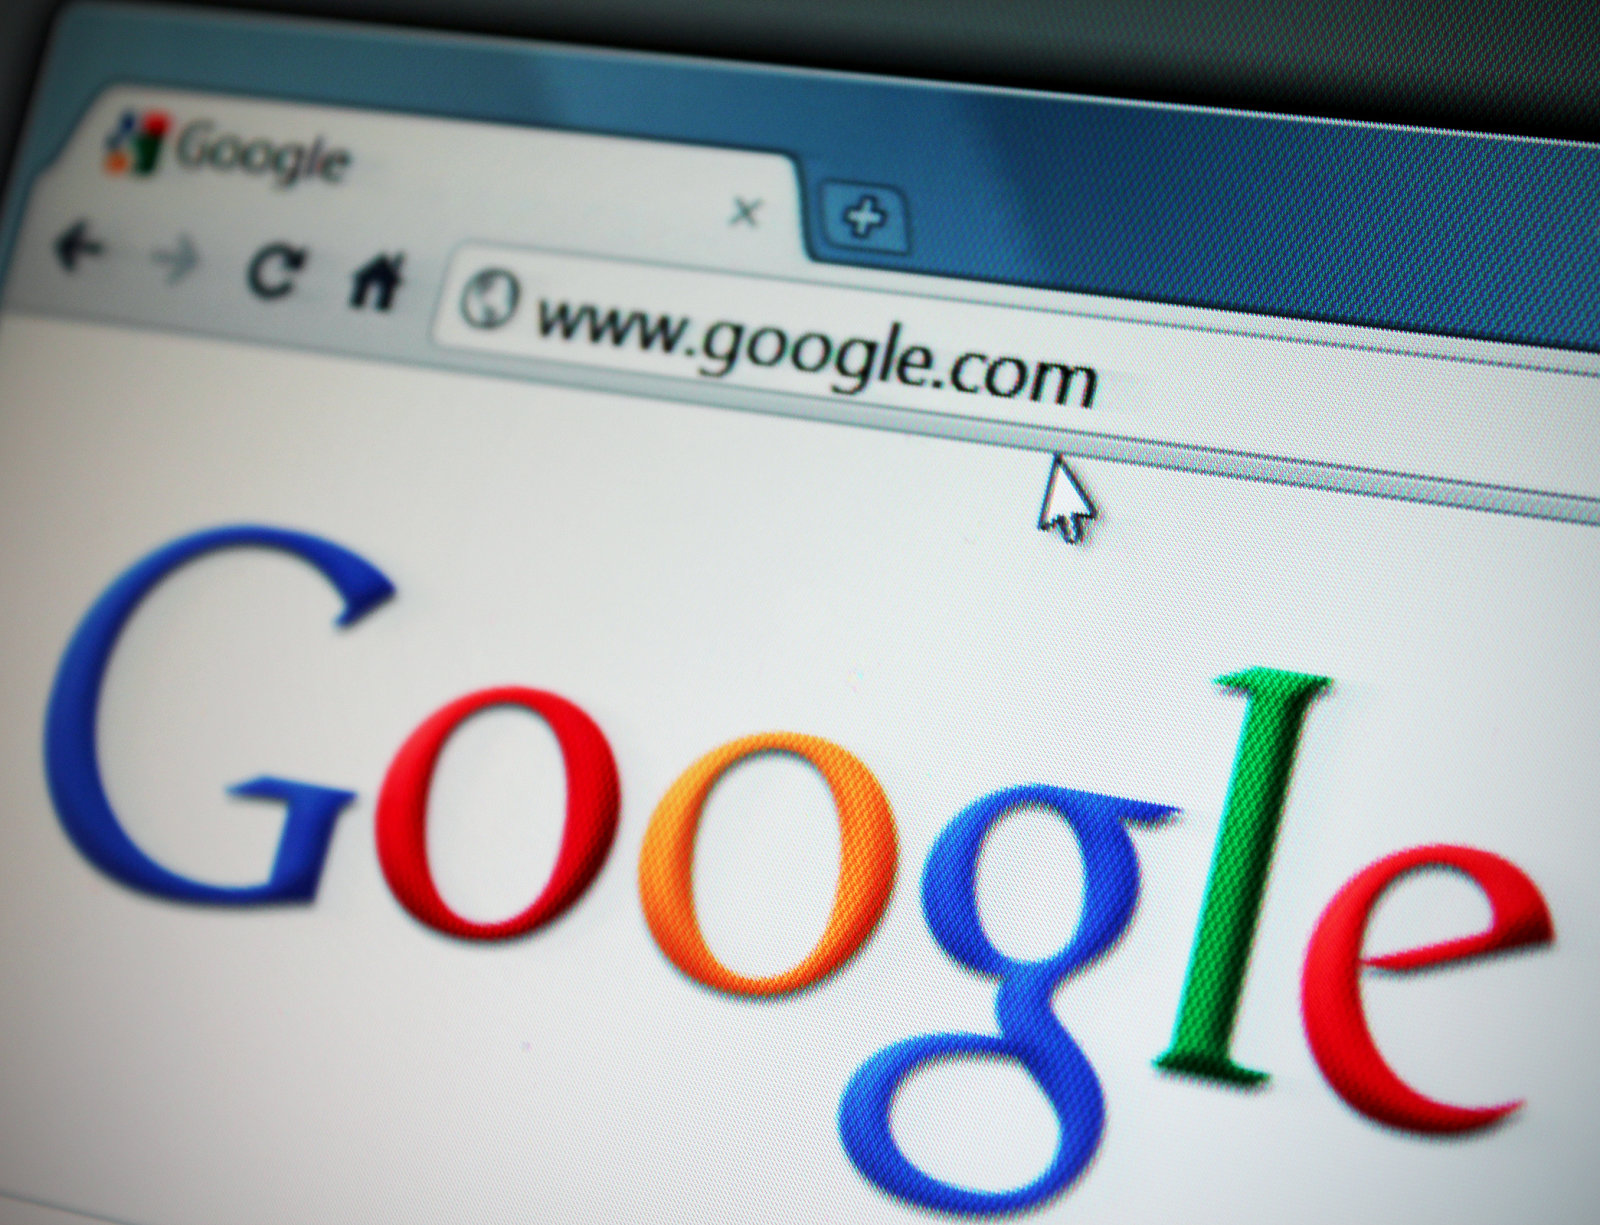 Google is shutting down its goo.gl URL shortening service